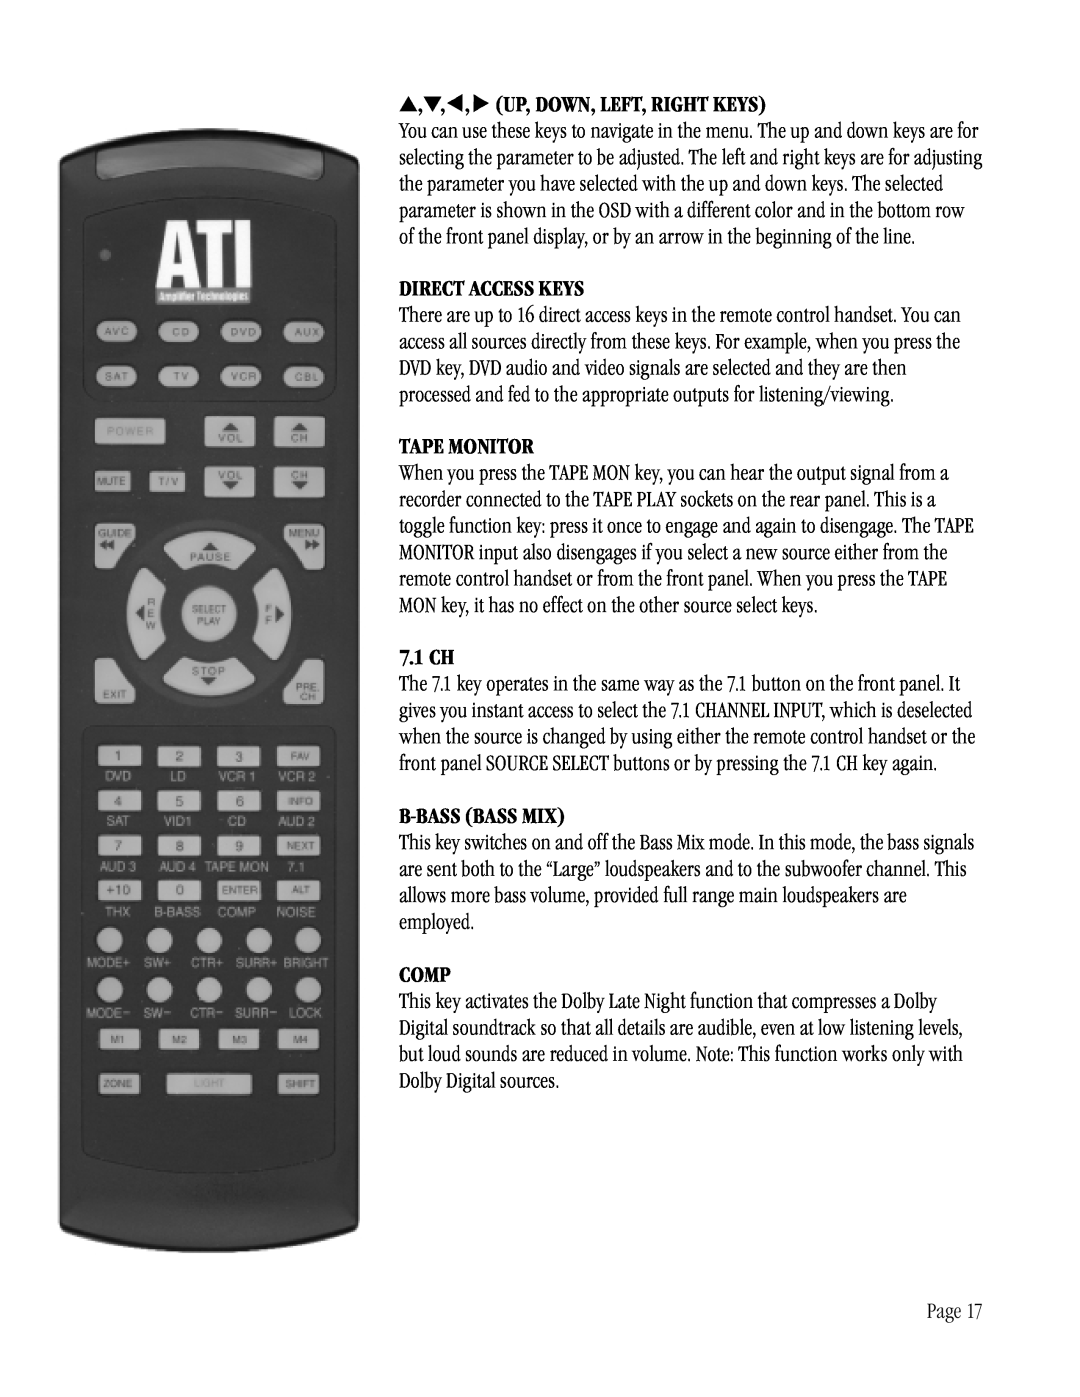 ATI Technologies ATP 8500 manual Up, Down, Left, Right Keys, Direct Access Keys, Tape Monitor, 7.1 CH, B-Bassbass Mix, Comp 